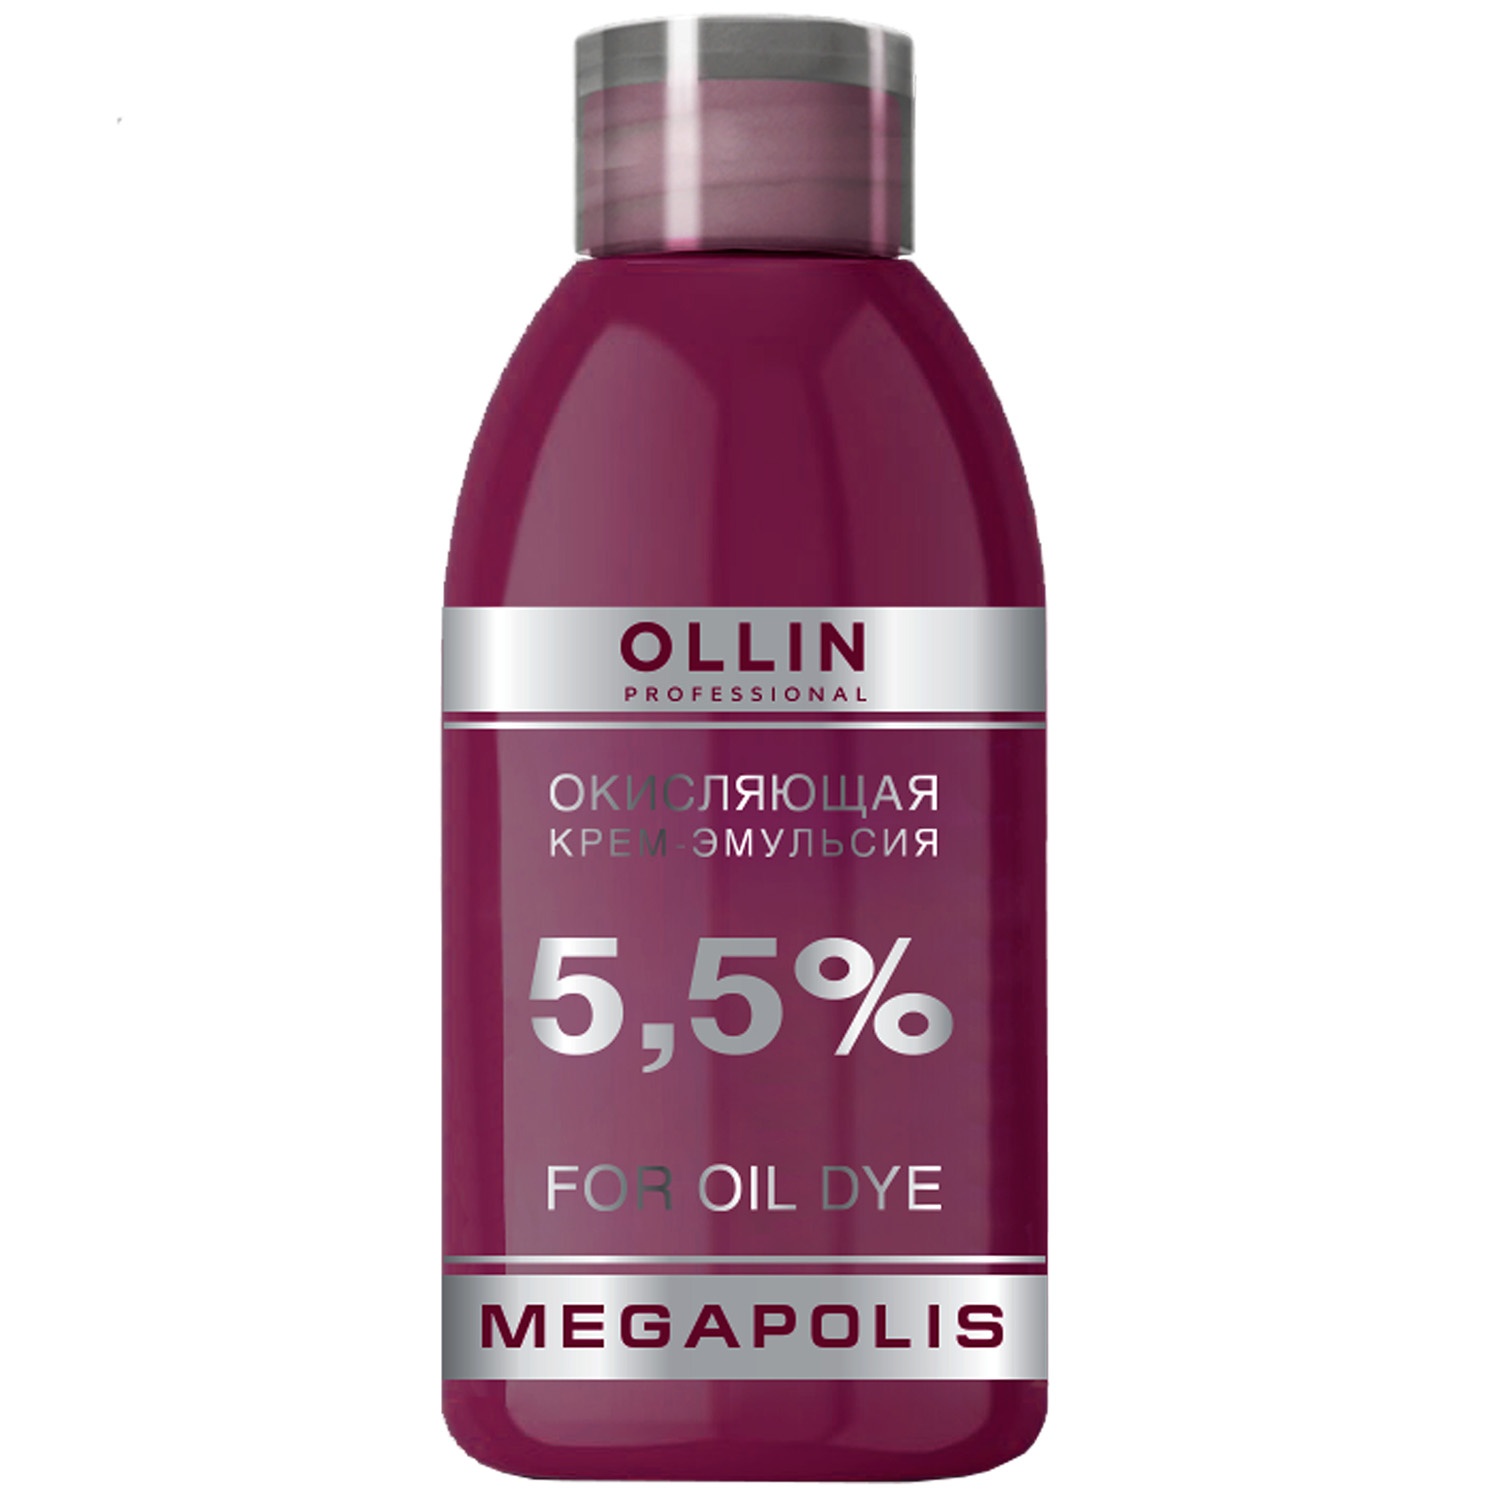 Ollin Professional Окисляющая крем-эмульсия 5,5%, 75 мл (Ollin Professional, Megapolis) окисляющая крем эмульсия 1% ollin professional megapolis 75 мл